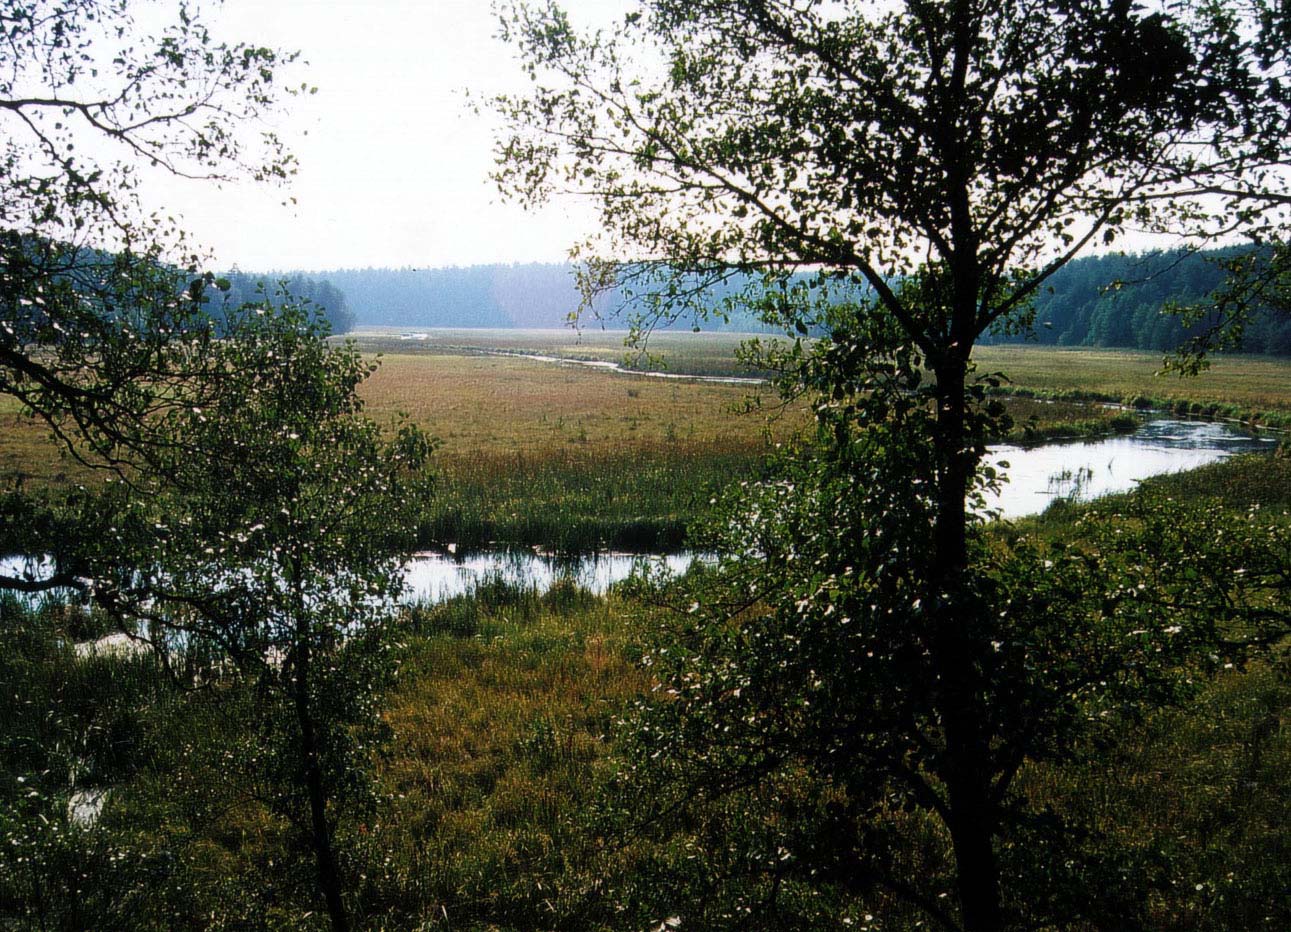 Vallée de la rivière Stążki